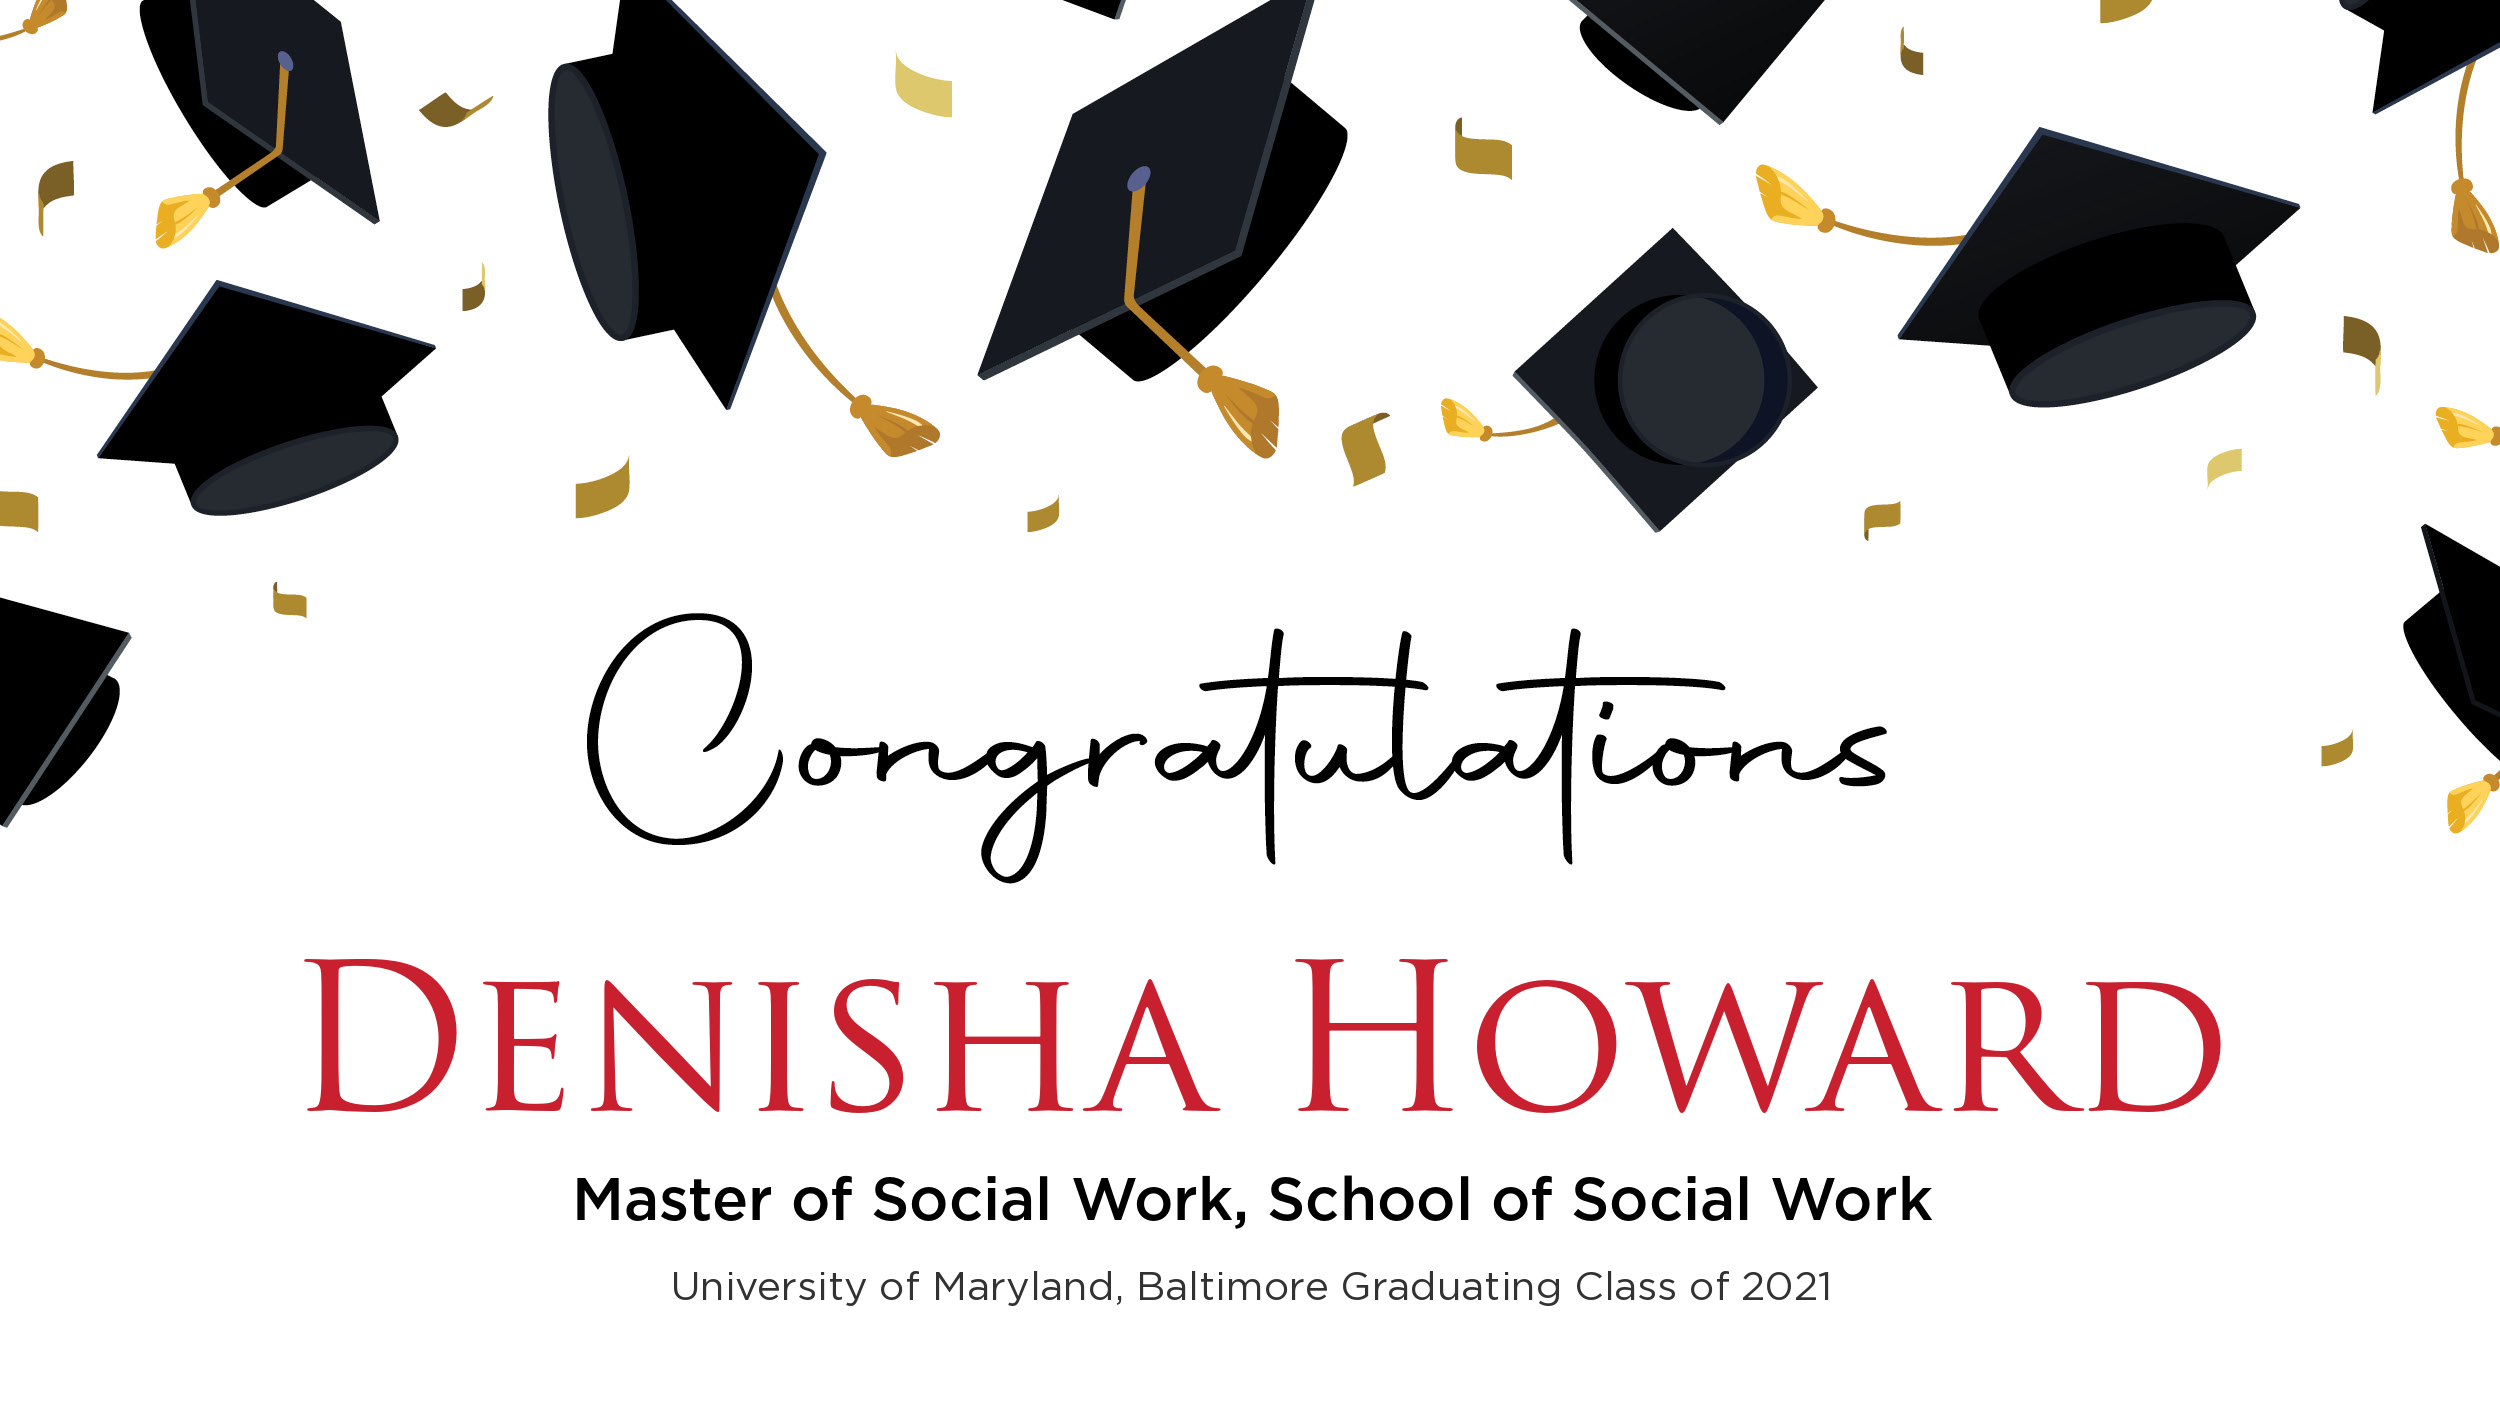 Congratulations Denisha Howard, Master of Social Work